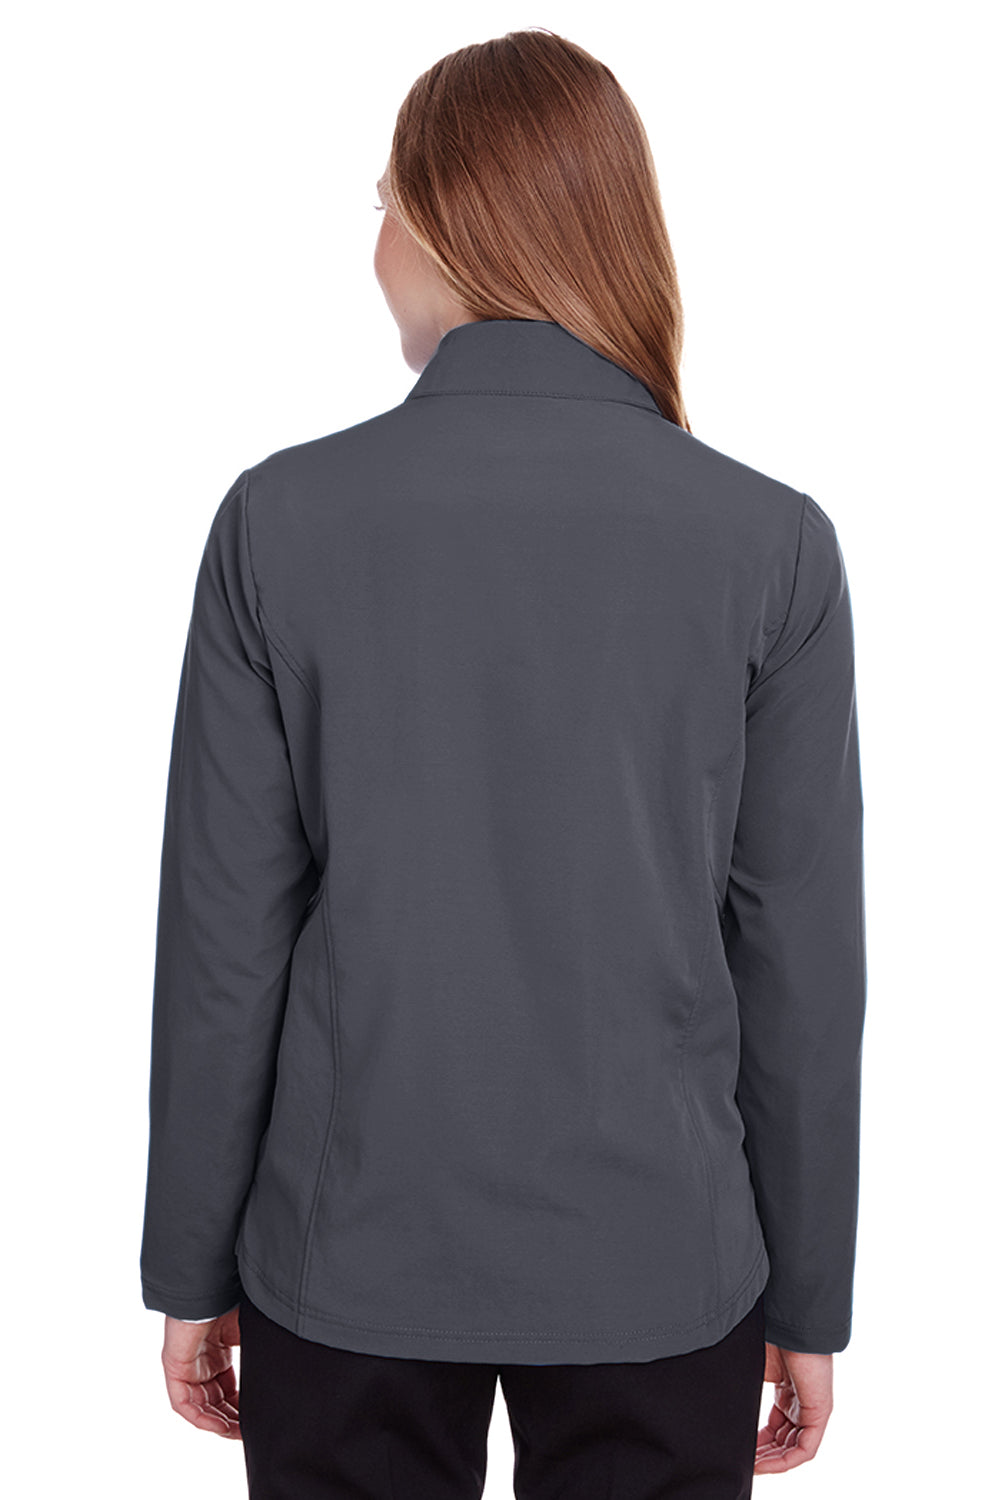 North End NE401W Womens Quest Performance Moisture Wicking 1/4 Zip Sweatshirt Carbon Grey/Black Back